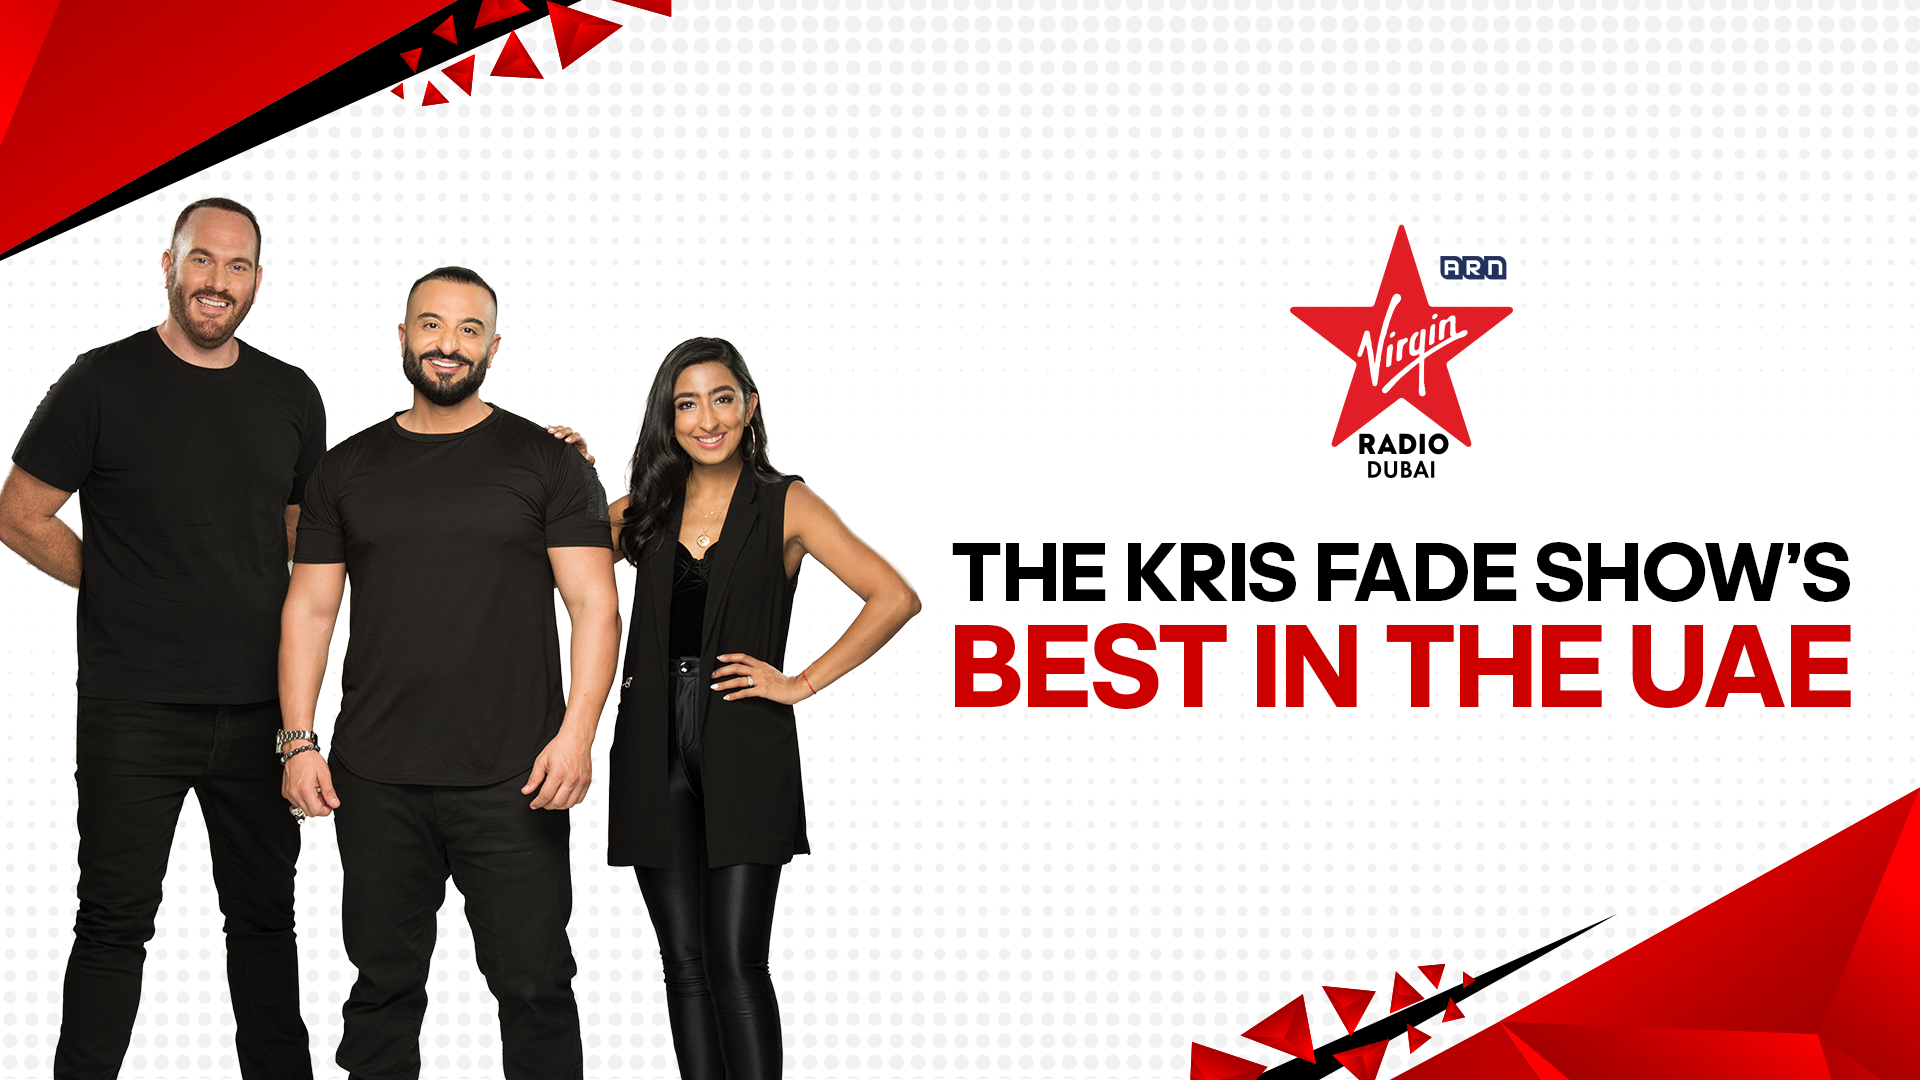 The Kris Fade Show's Best in the UAE - Virgin Dubai